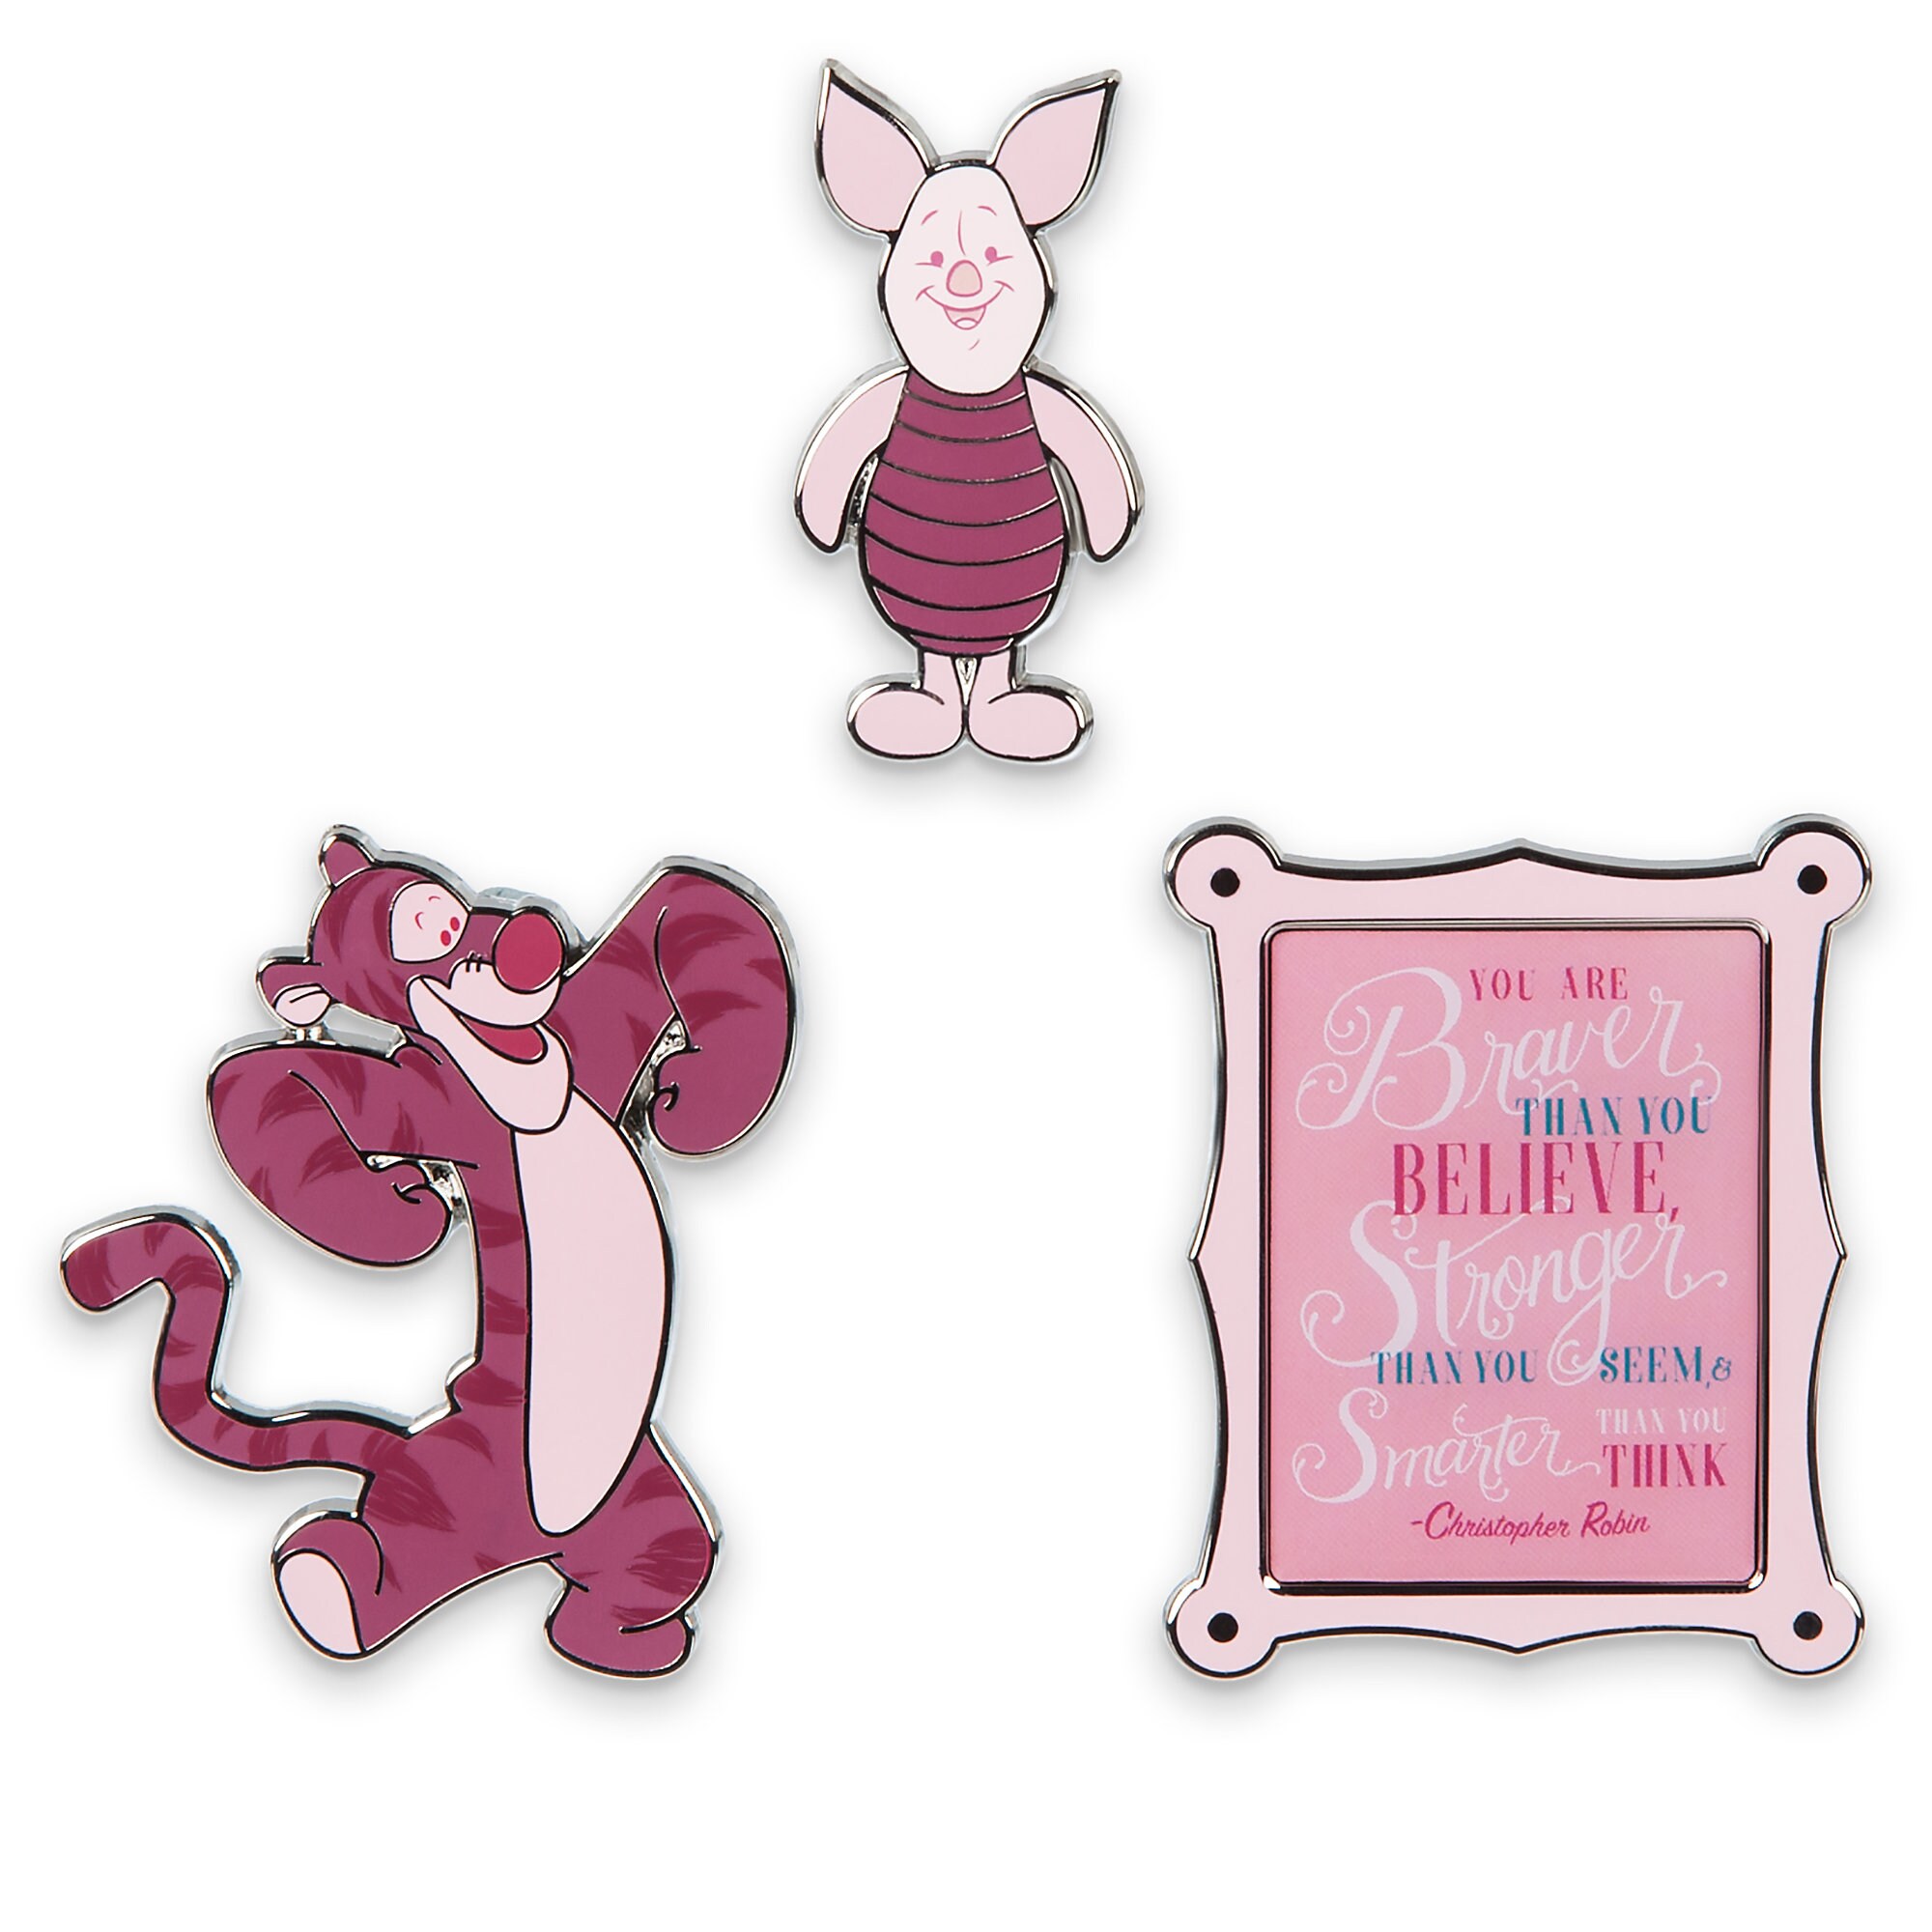 Disney Wisdom Pin Set - Piglet - April - Limited Release